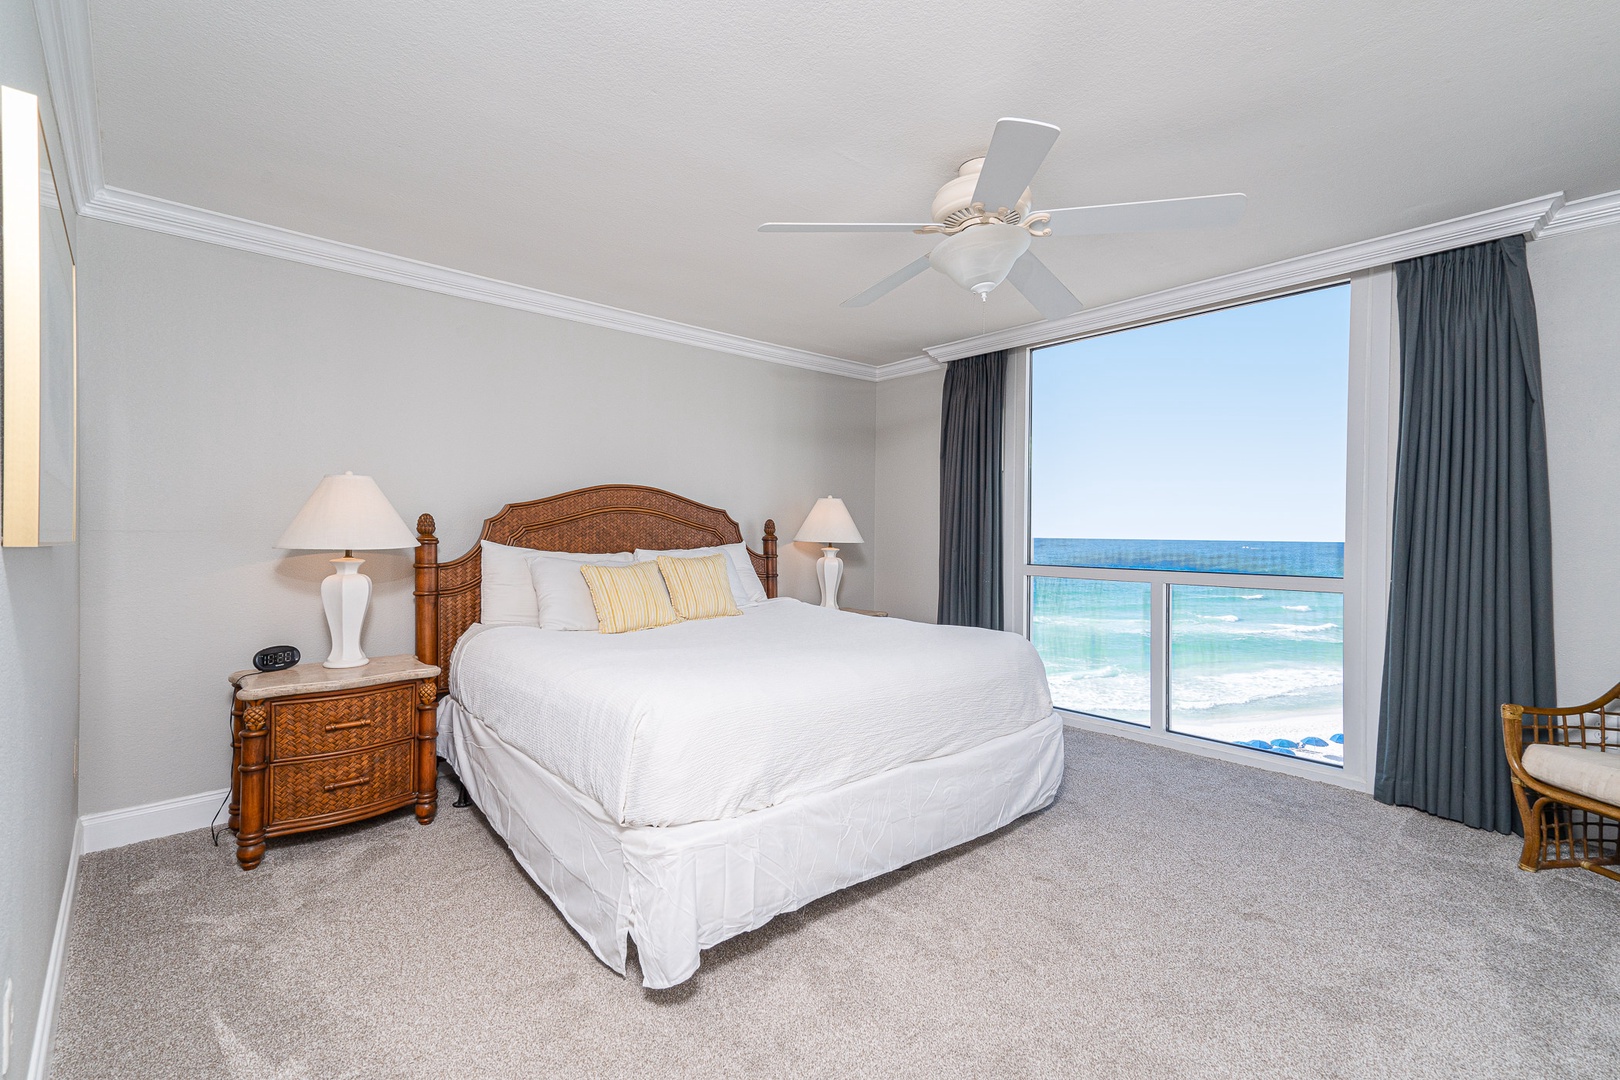 Bedroom 1 with King bed, ocean view, balcony access, TV, and en-suite